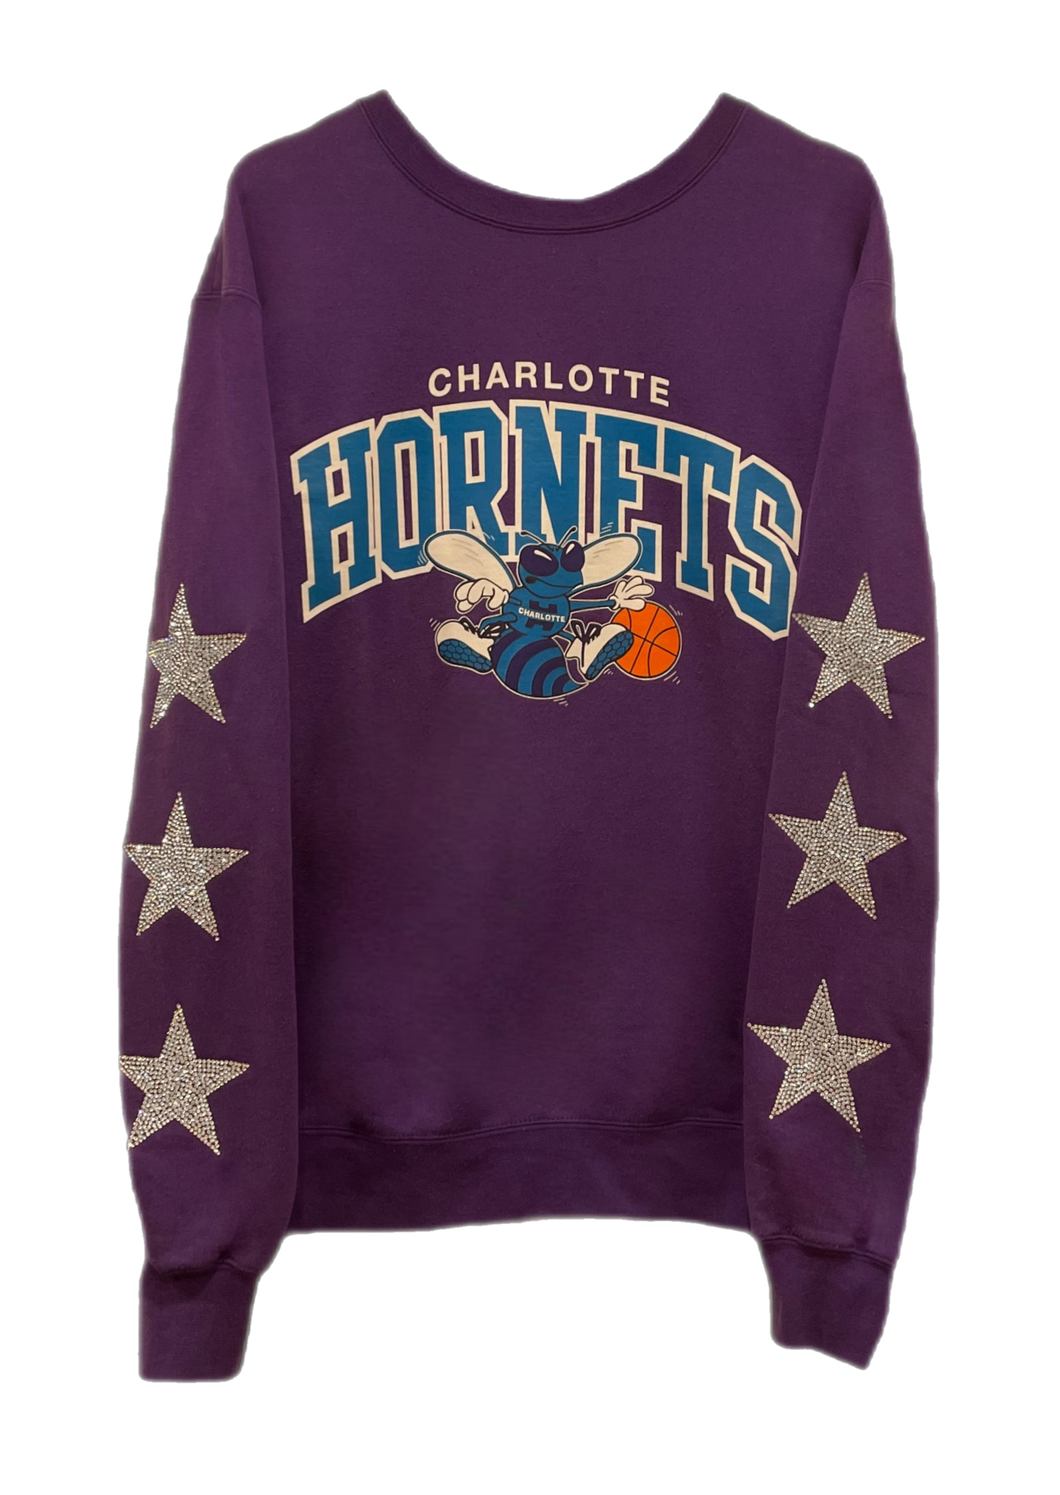 Charlotte Hornets, NBA One of a KIND Vintage Sweatshirt with Three Crystal Star Design